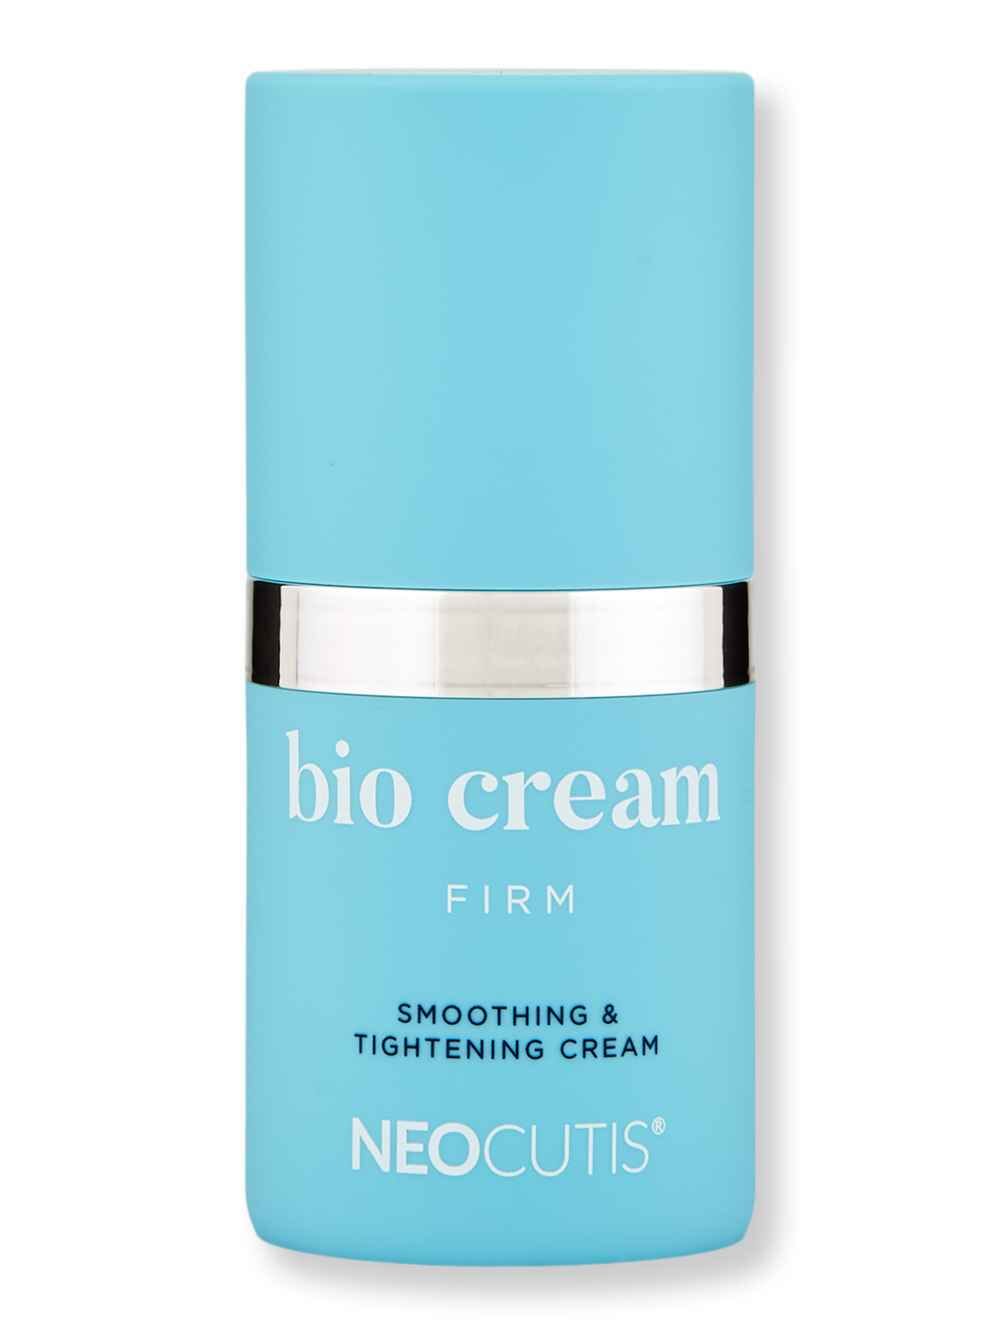 Neocutis Neocutis Bio Cream Firm Smoothing & Tightening Cream 15 ml Face Moisturizers 